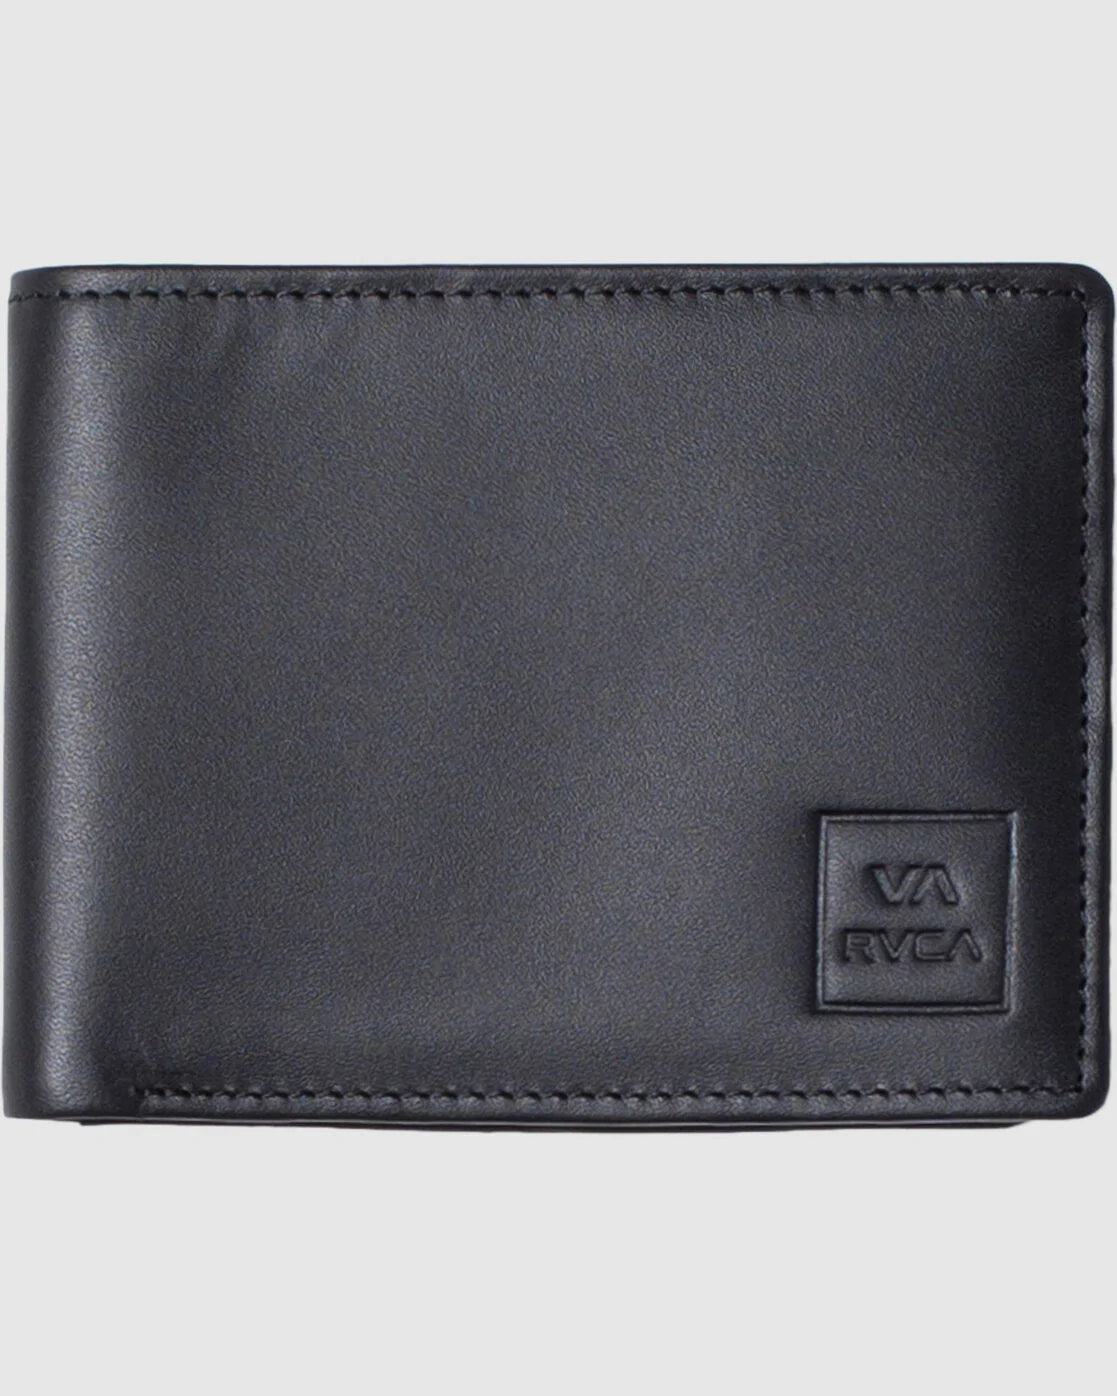 RVCA Cedar Bi-Fold Leather Wallet